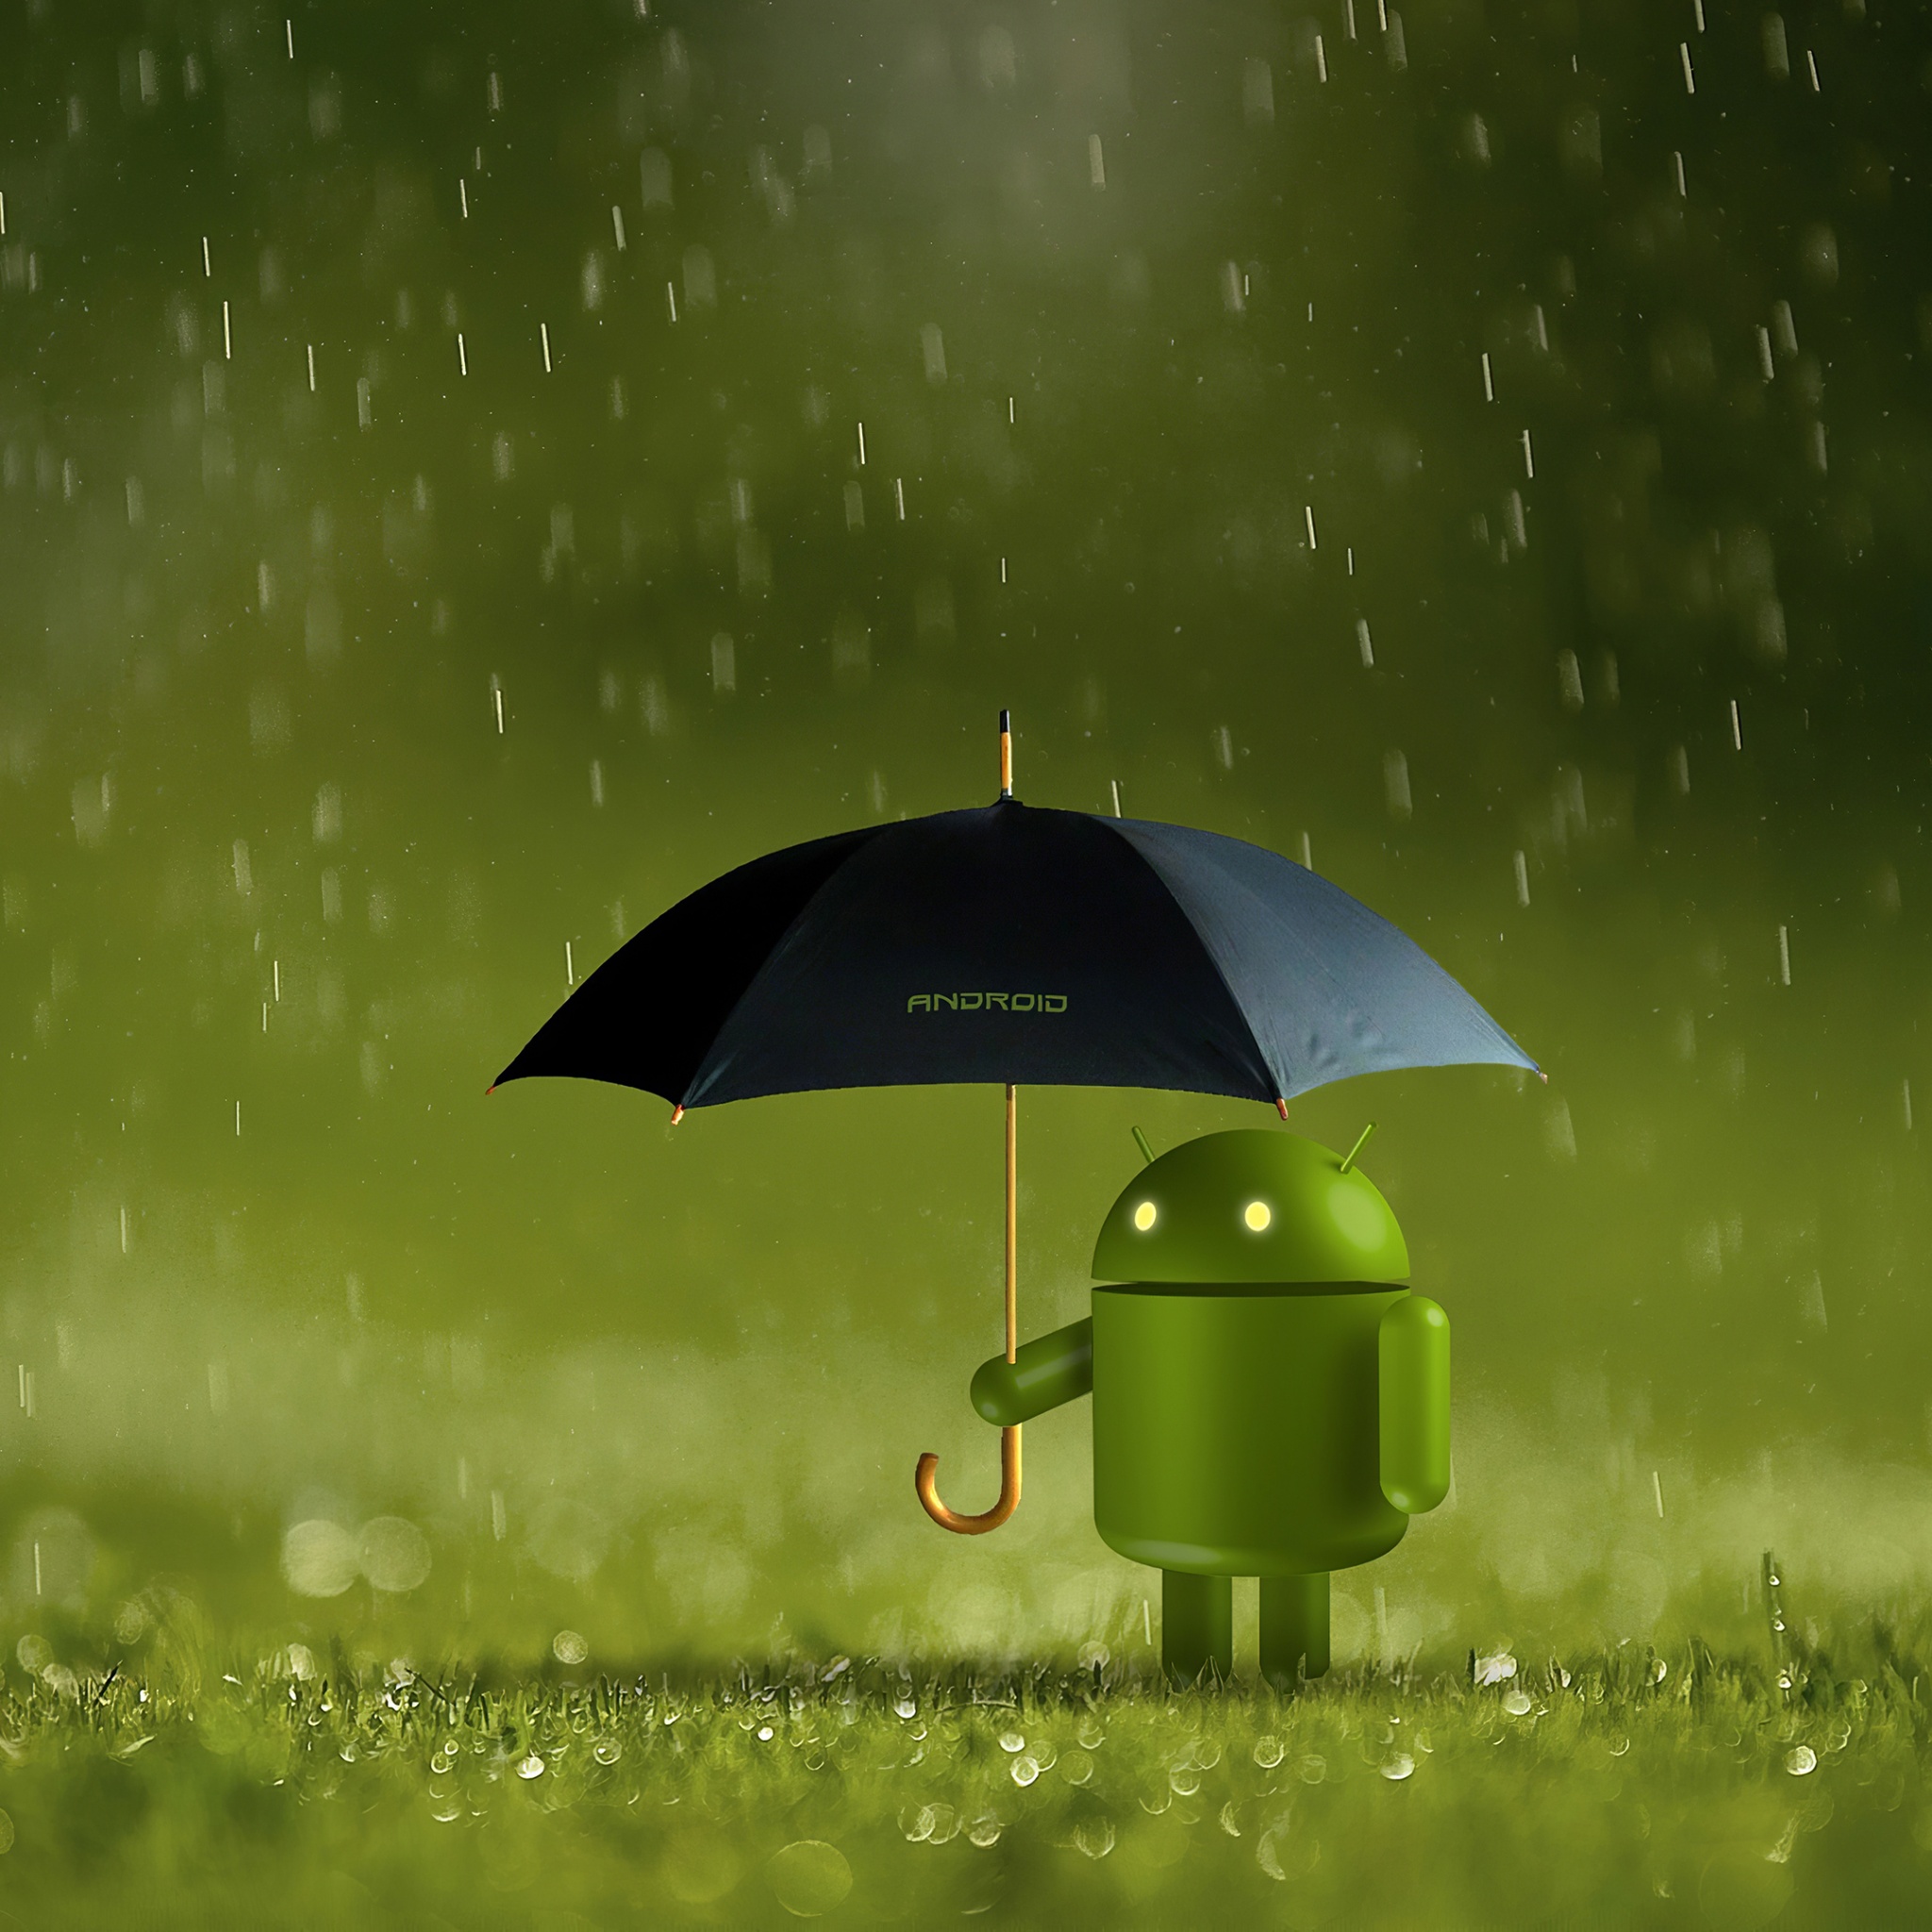 Følsom propel Berolige Android logo Wallpaper 4K, Android robot, Umbrella, Rain, #1571